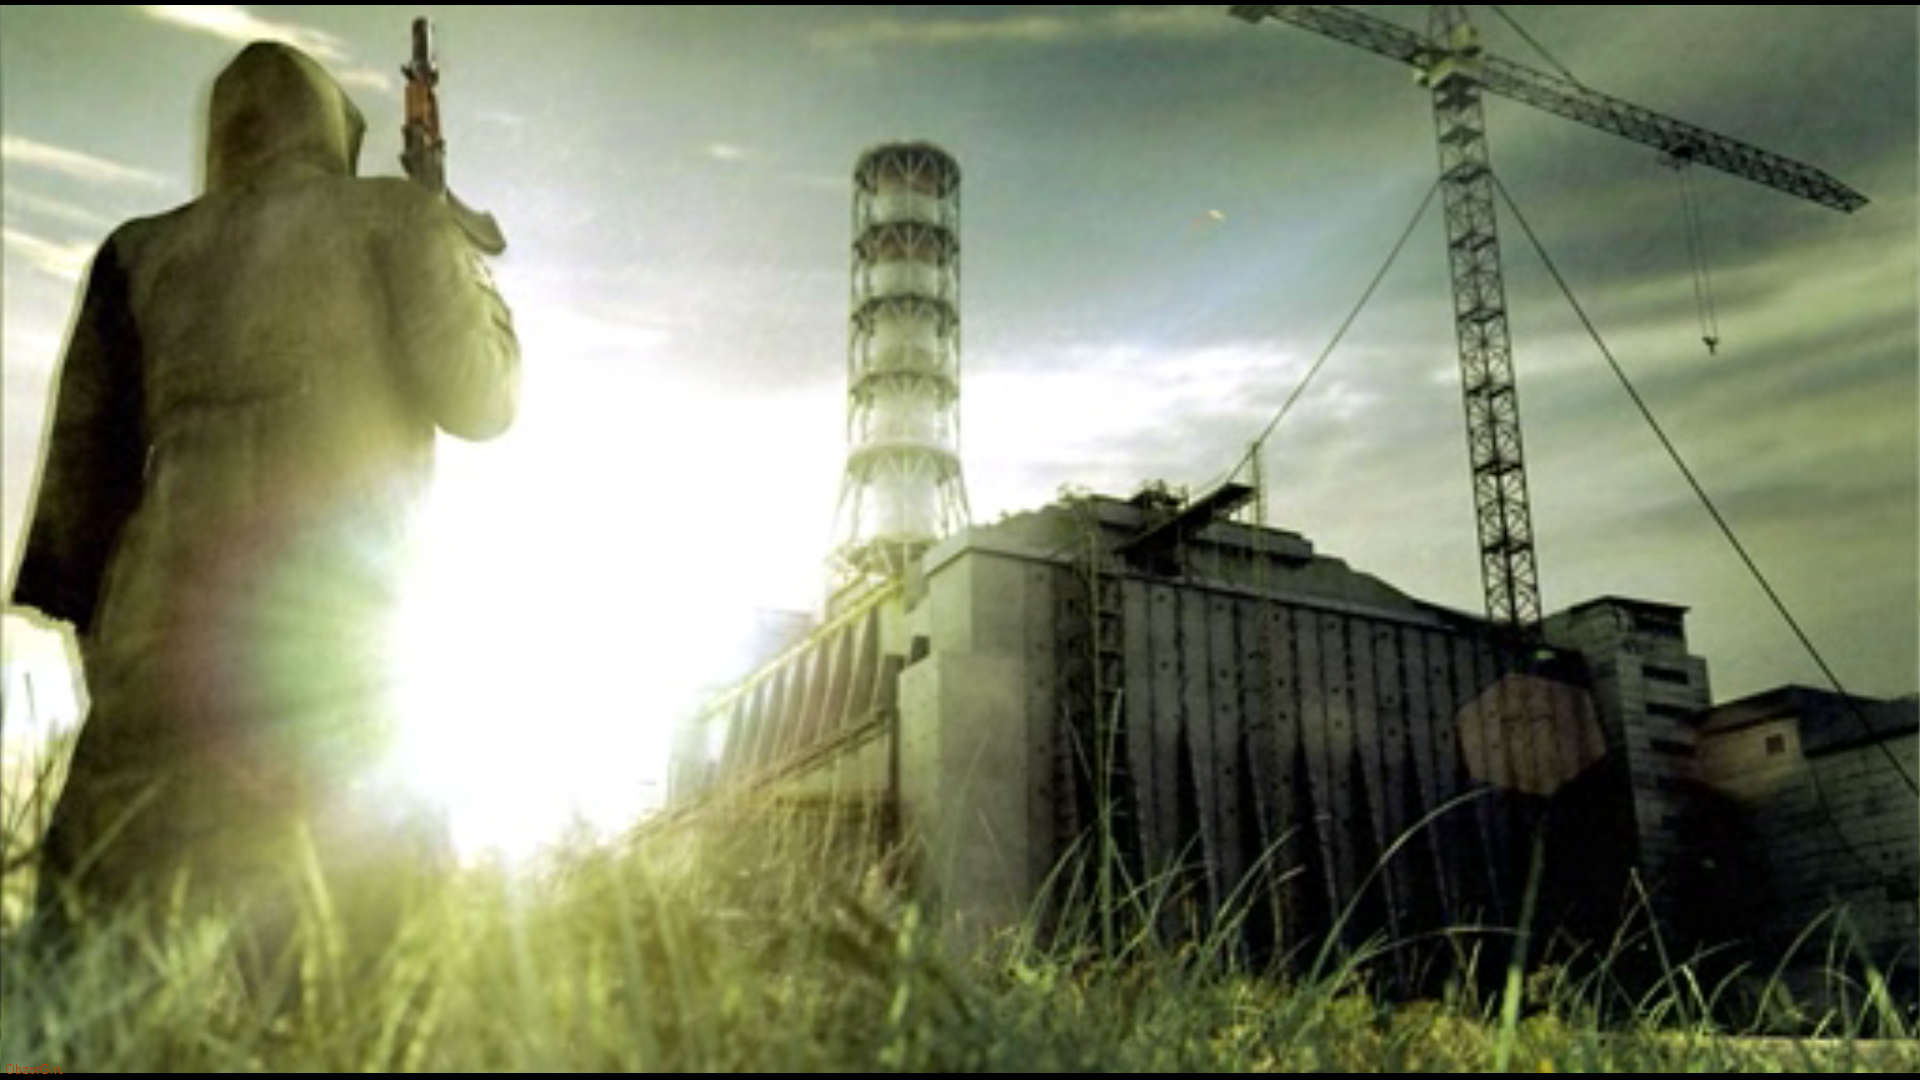 stalker-shadow-of-chernobyl-screenshot-4